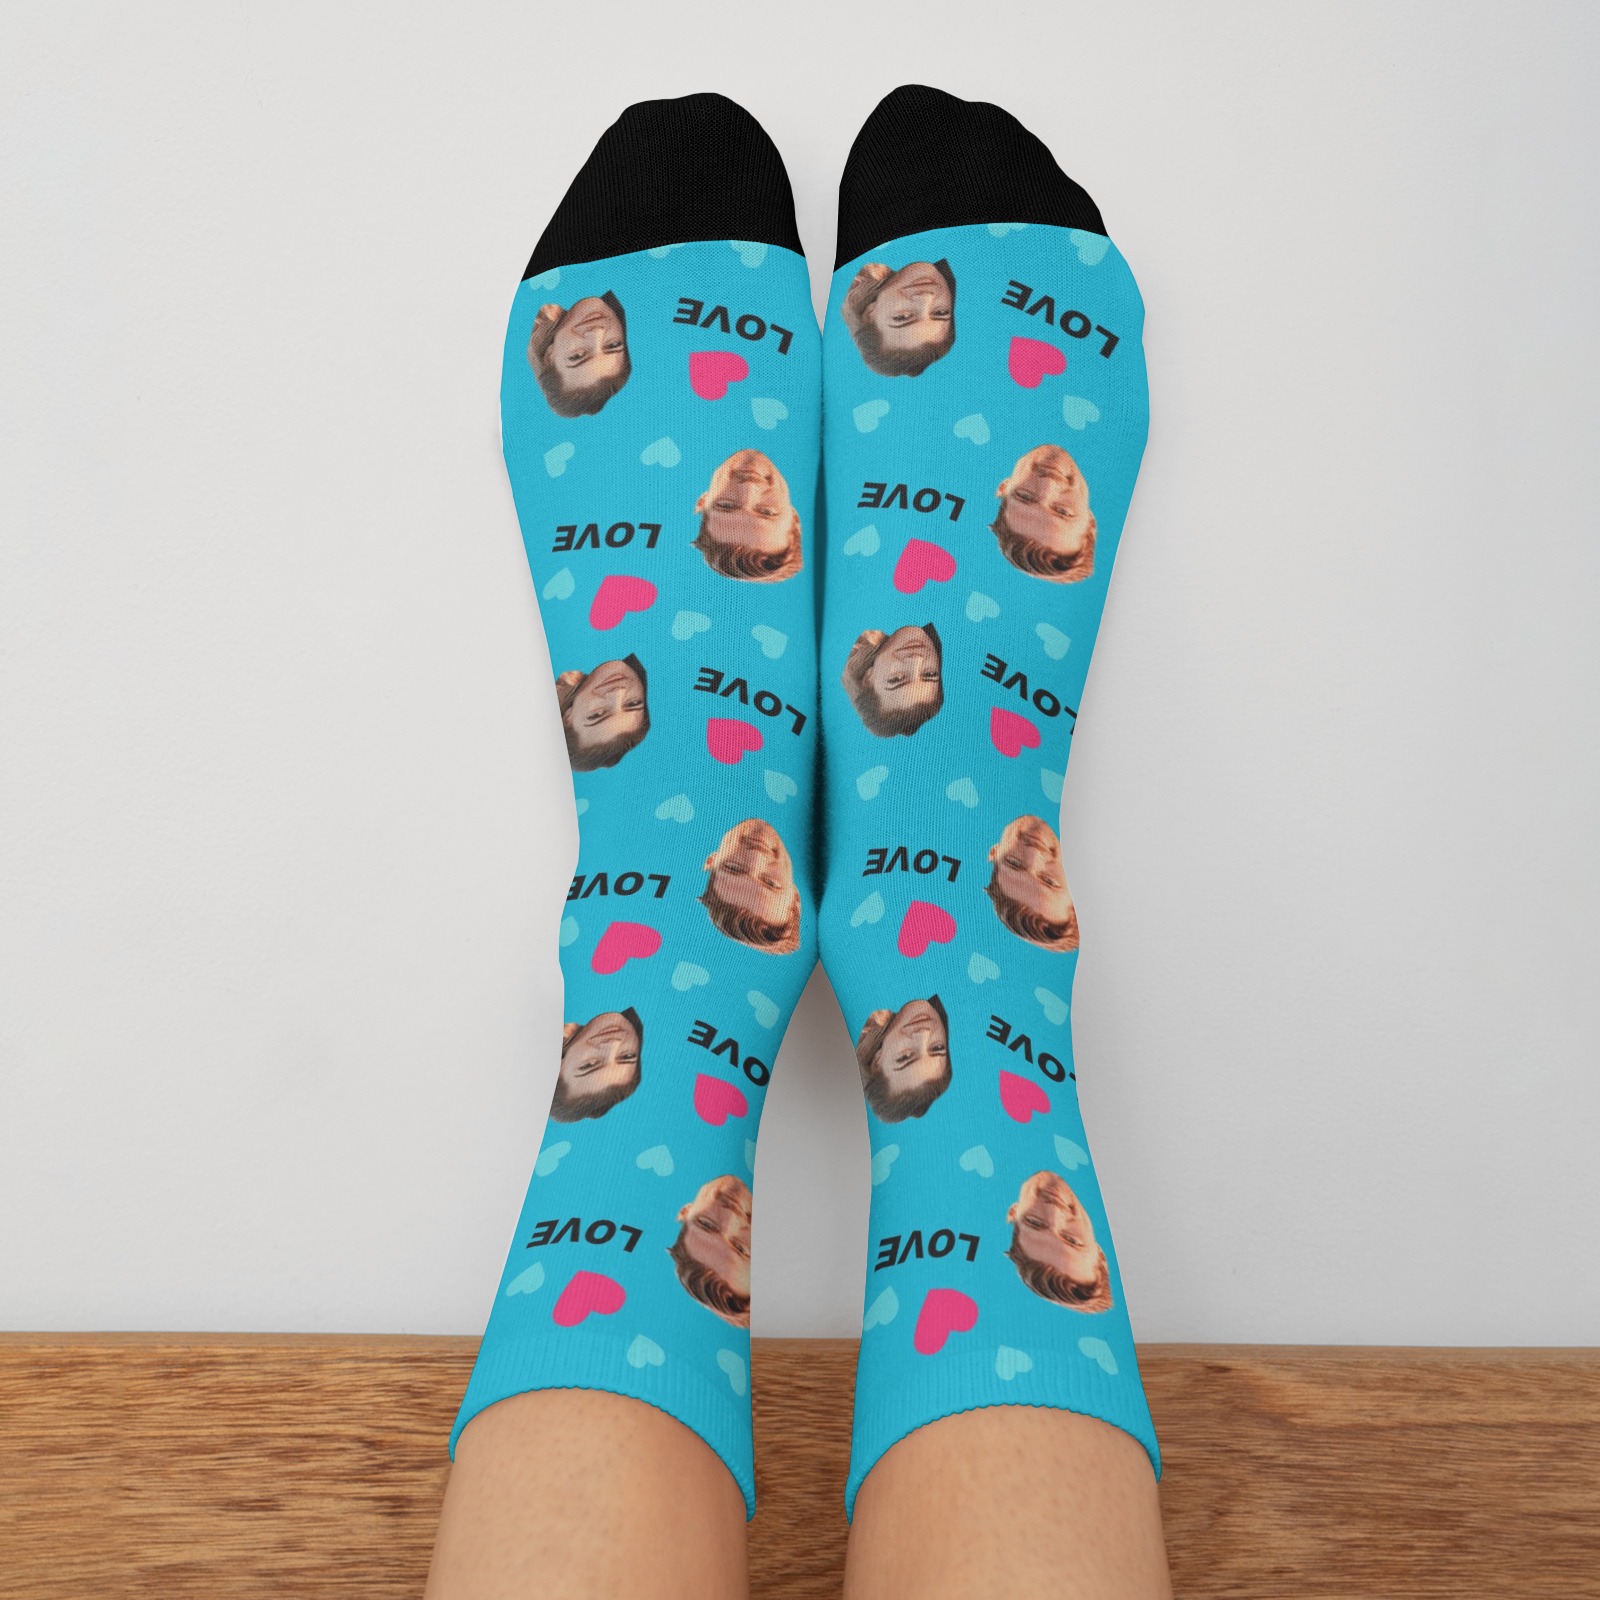 Custom Socks Heart And Love Personalized Face Socks